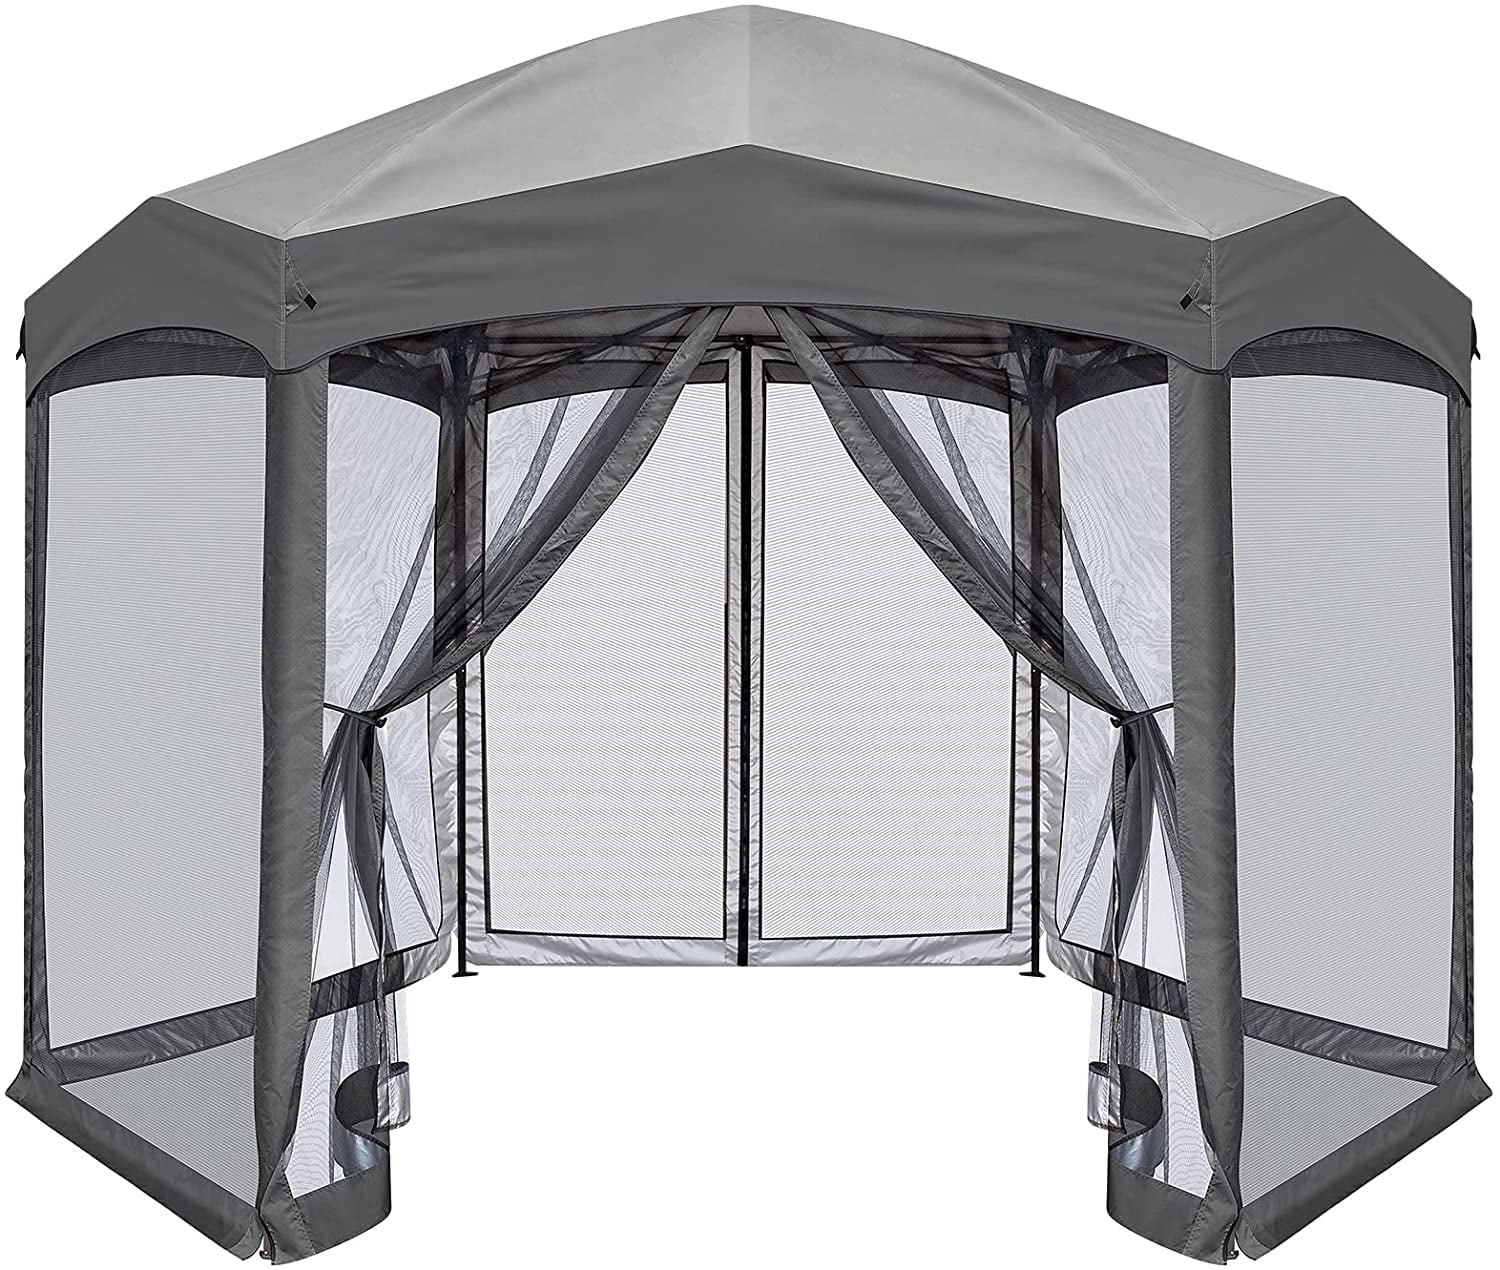 EAGLE PEAK 13' x 13' Pop-Up Gazebo Tent Instant w/Mosquito Netting，Outdoor Gazebo Canopy Easy Set-up Folding Shelter Beige/Brown